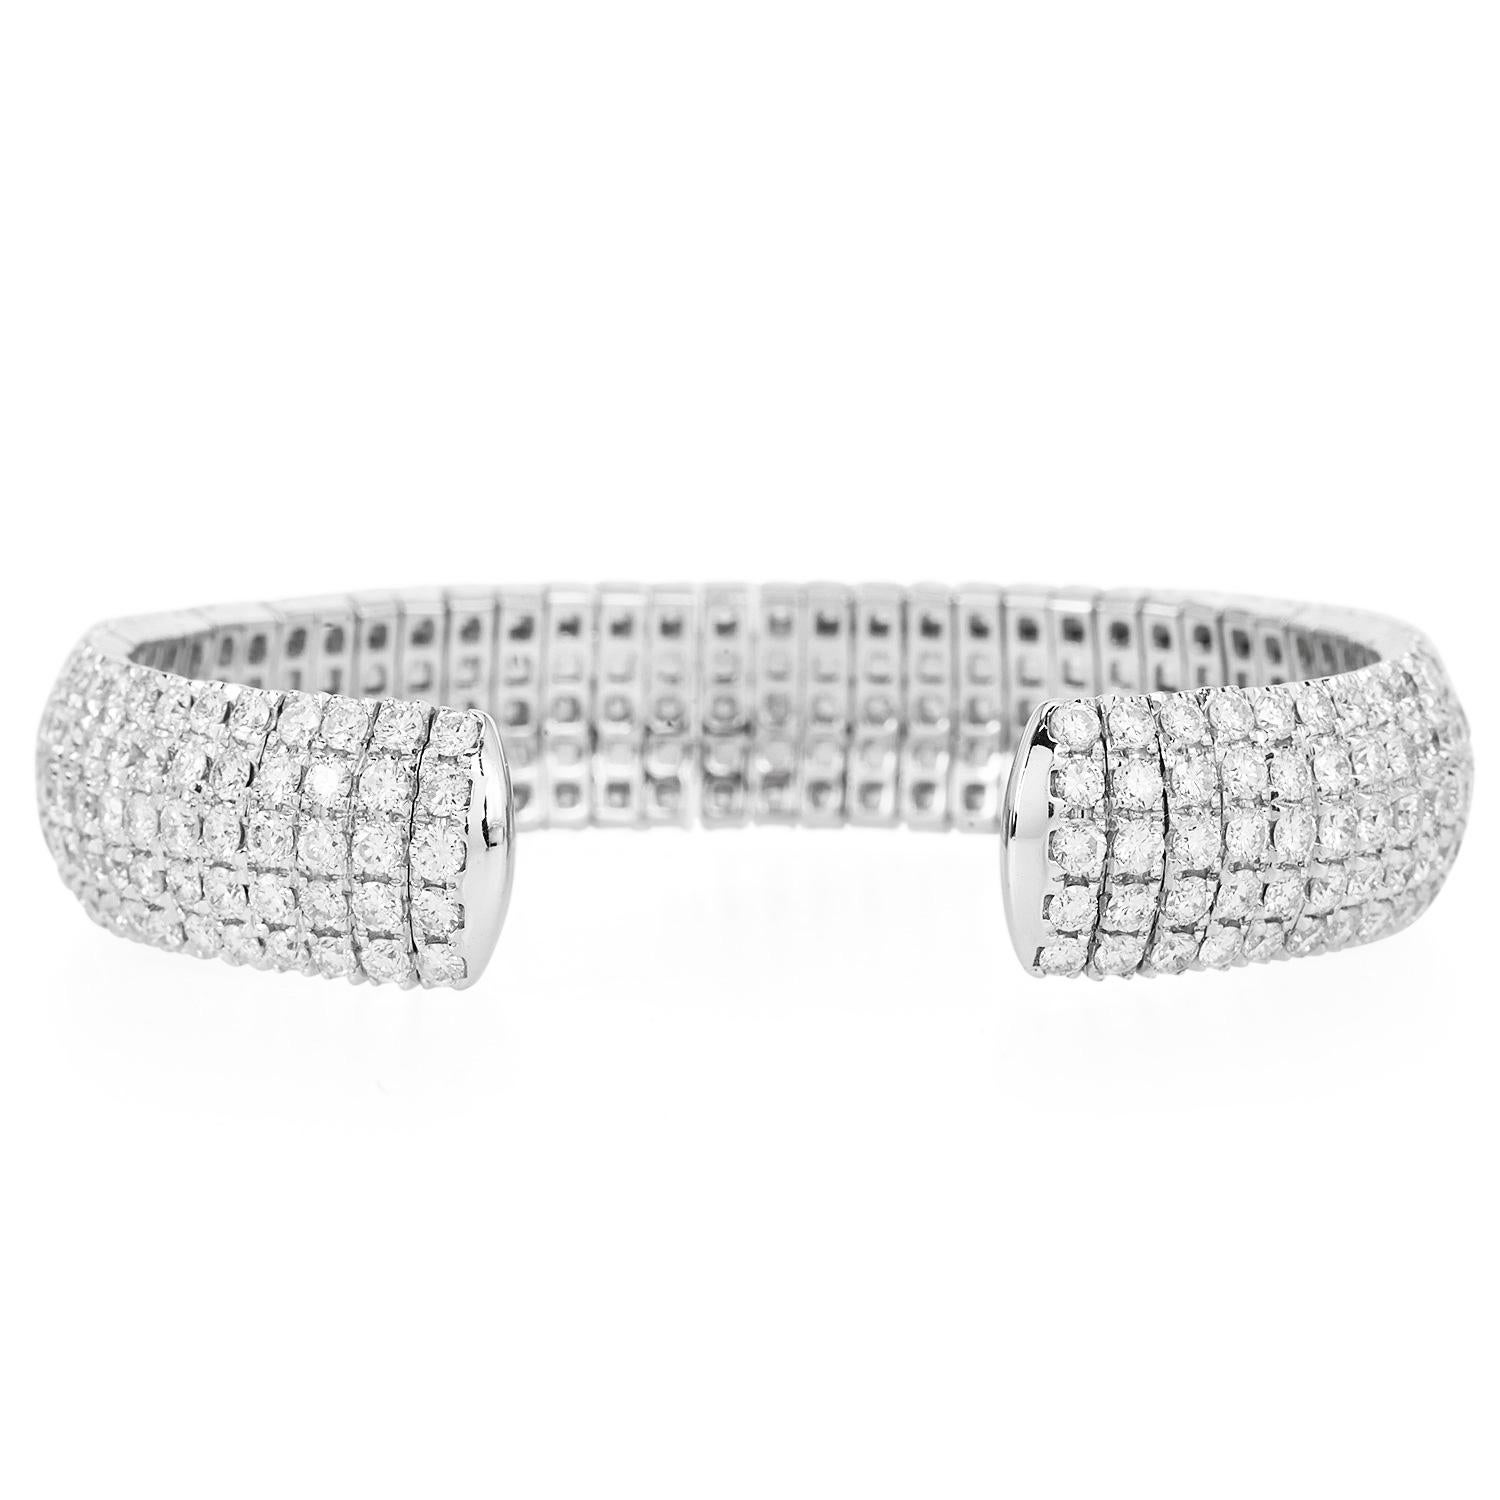  15.72 carat Diamond 18K Gold Wide Five Row Cuff Statement Bracelet In Excellent Condition For Sale In Miami, FL